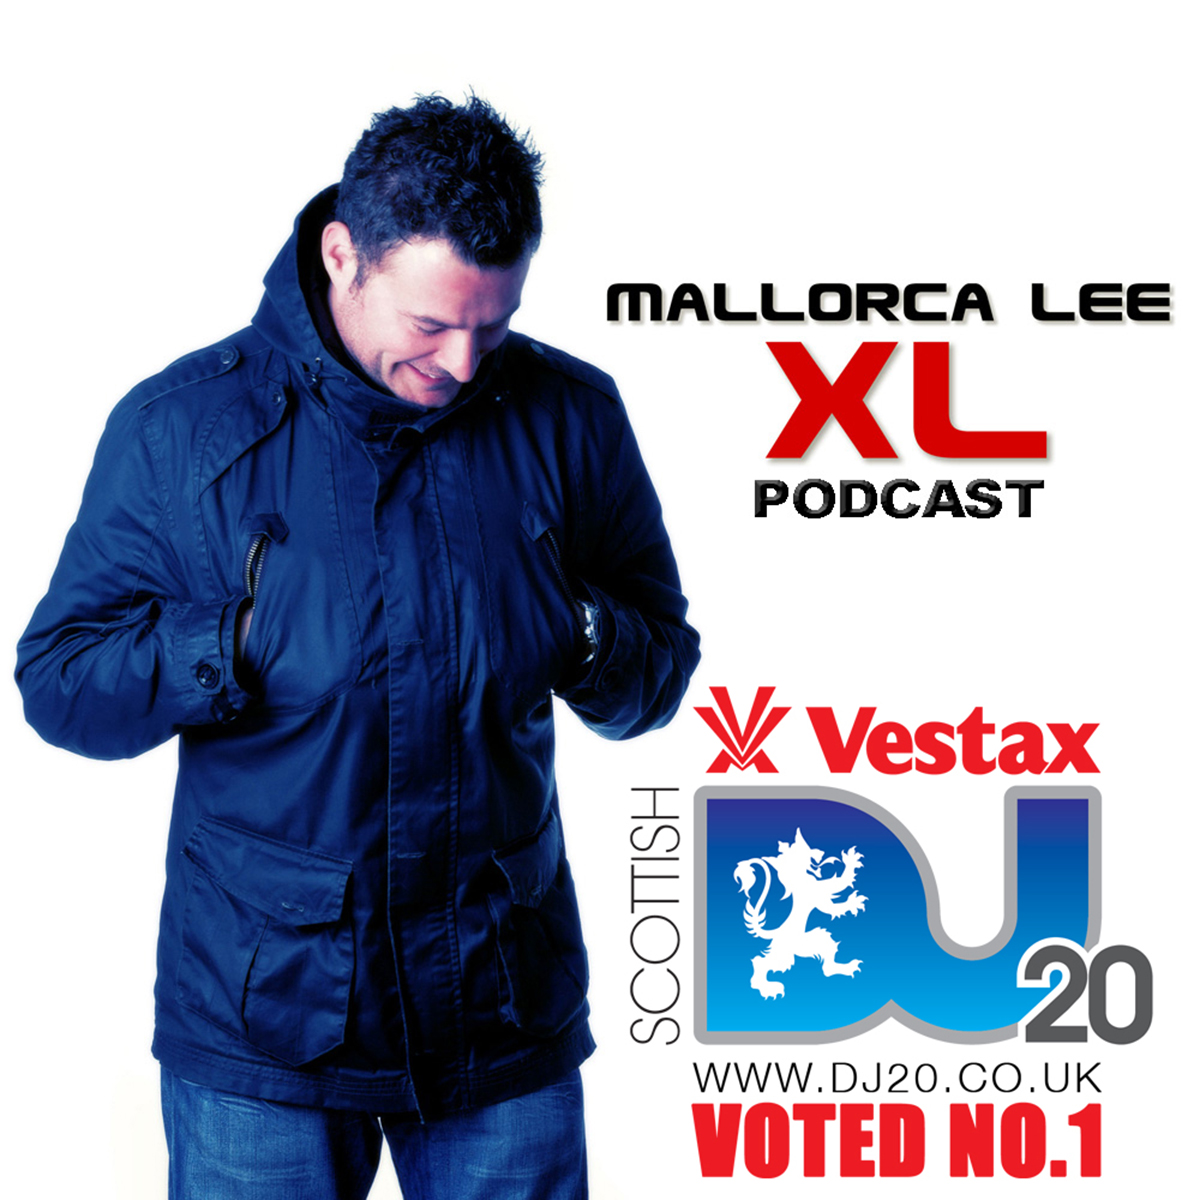 Mallorca Lee’s XL Podcast ep.24 The Vestax Scottish DJ20 No.1 2012